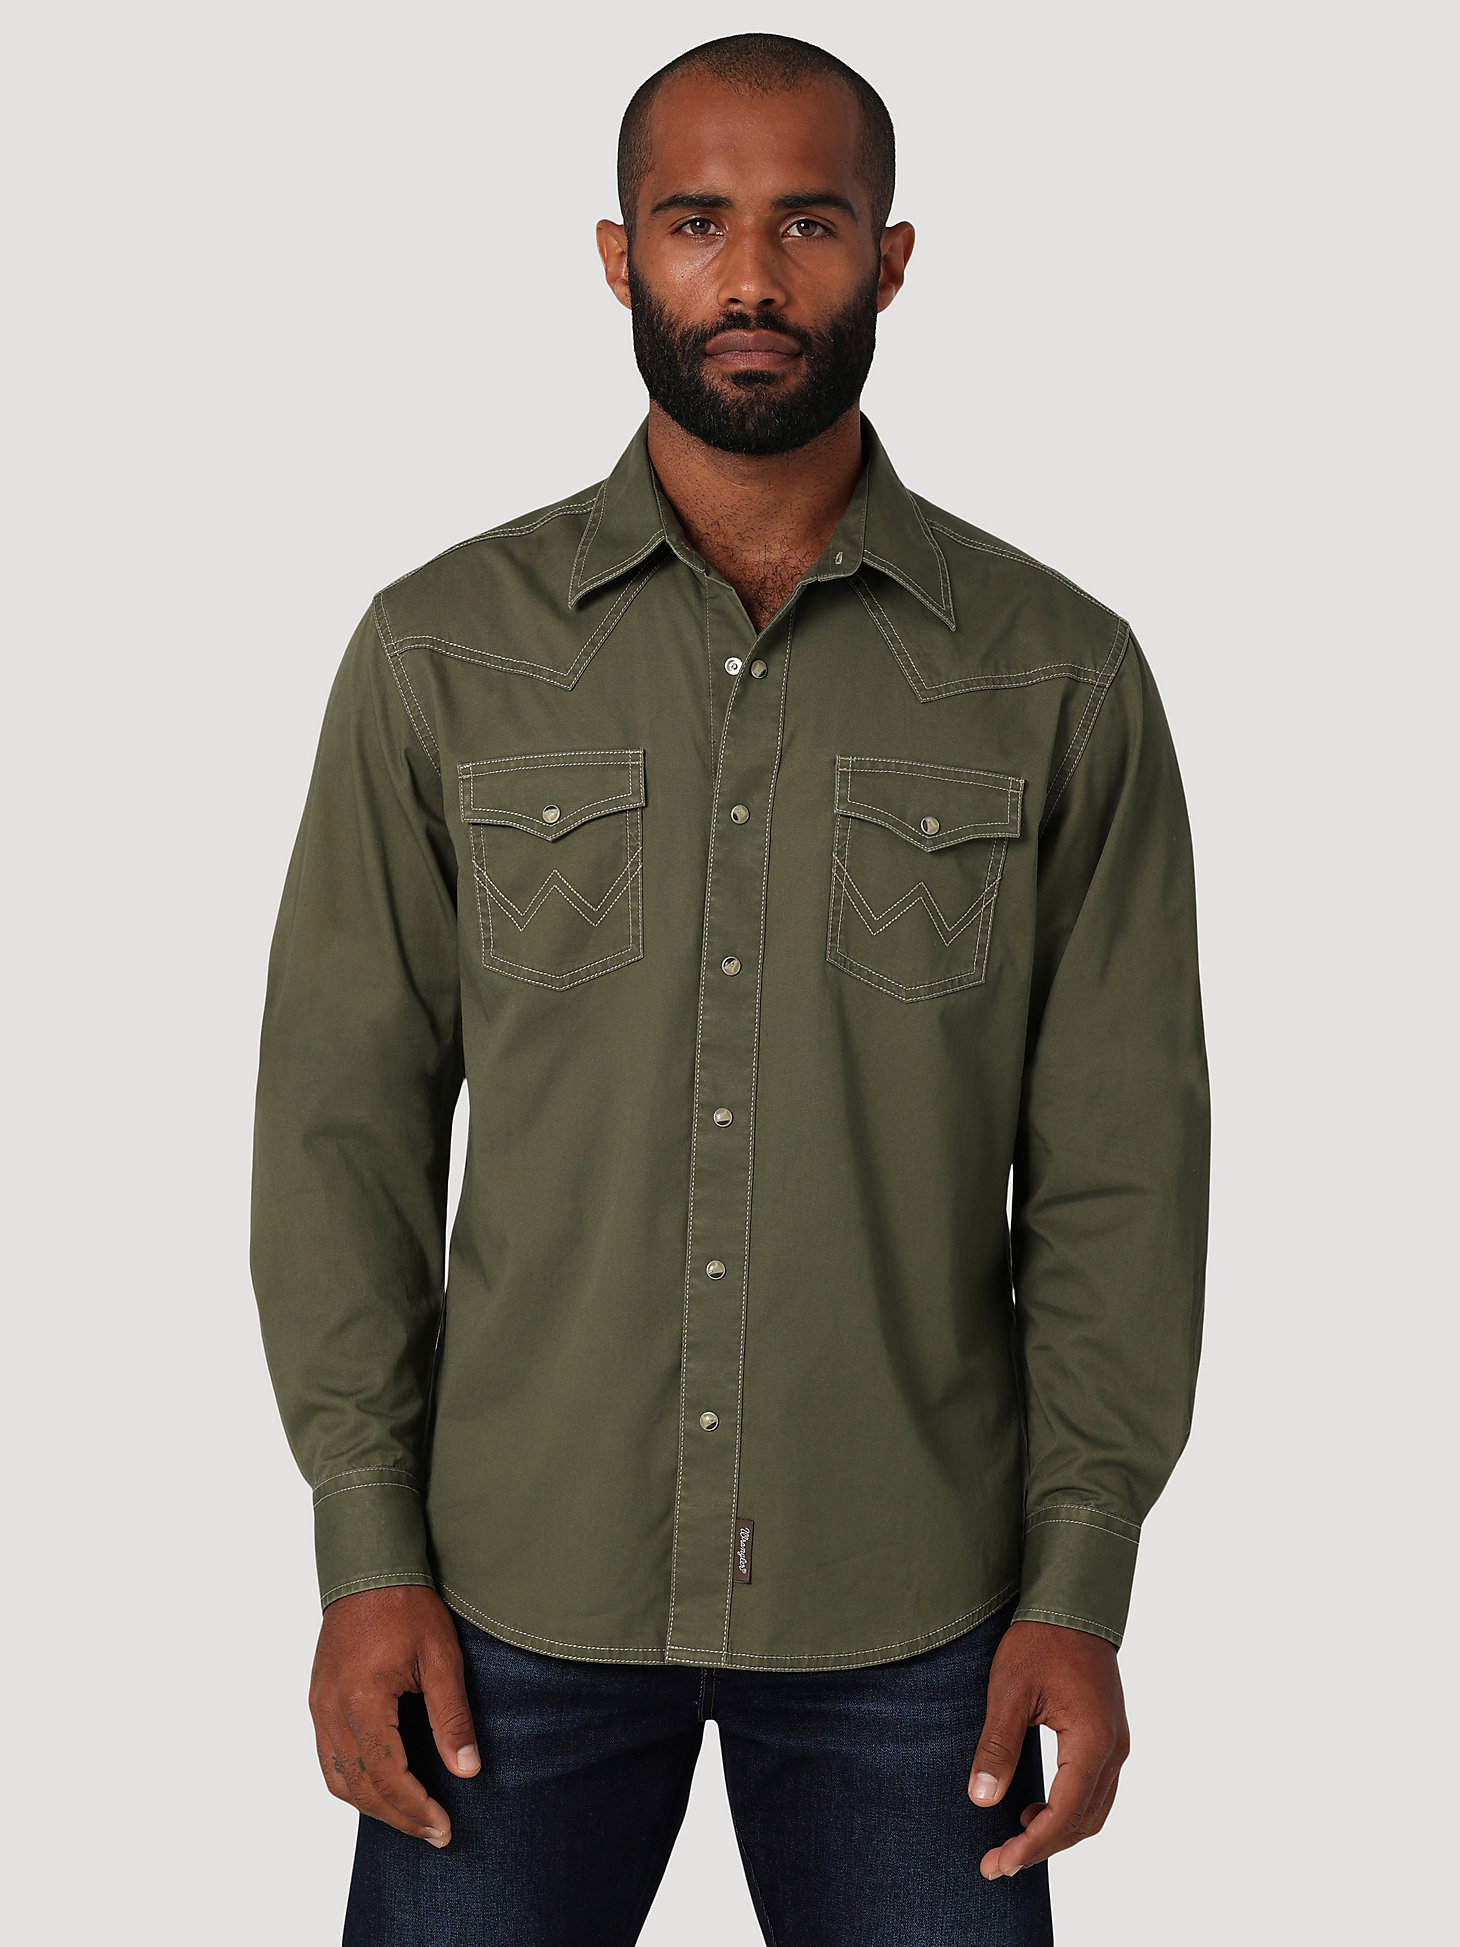 Men's Wrangler Retro Premium Western Snap Solid Shirt in Grape Leaf main view